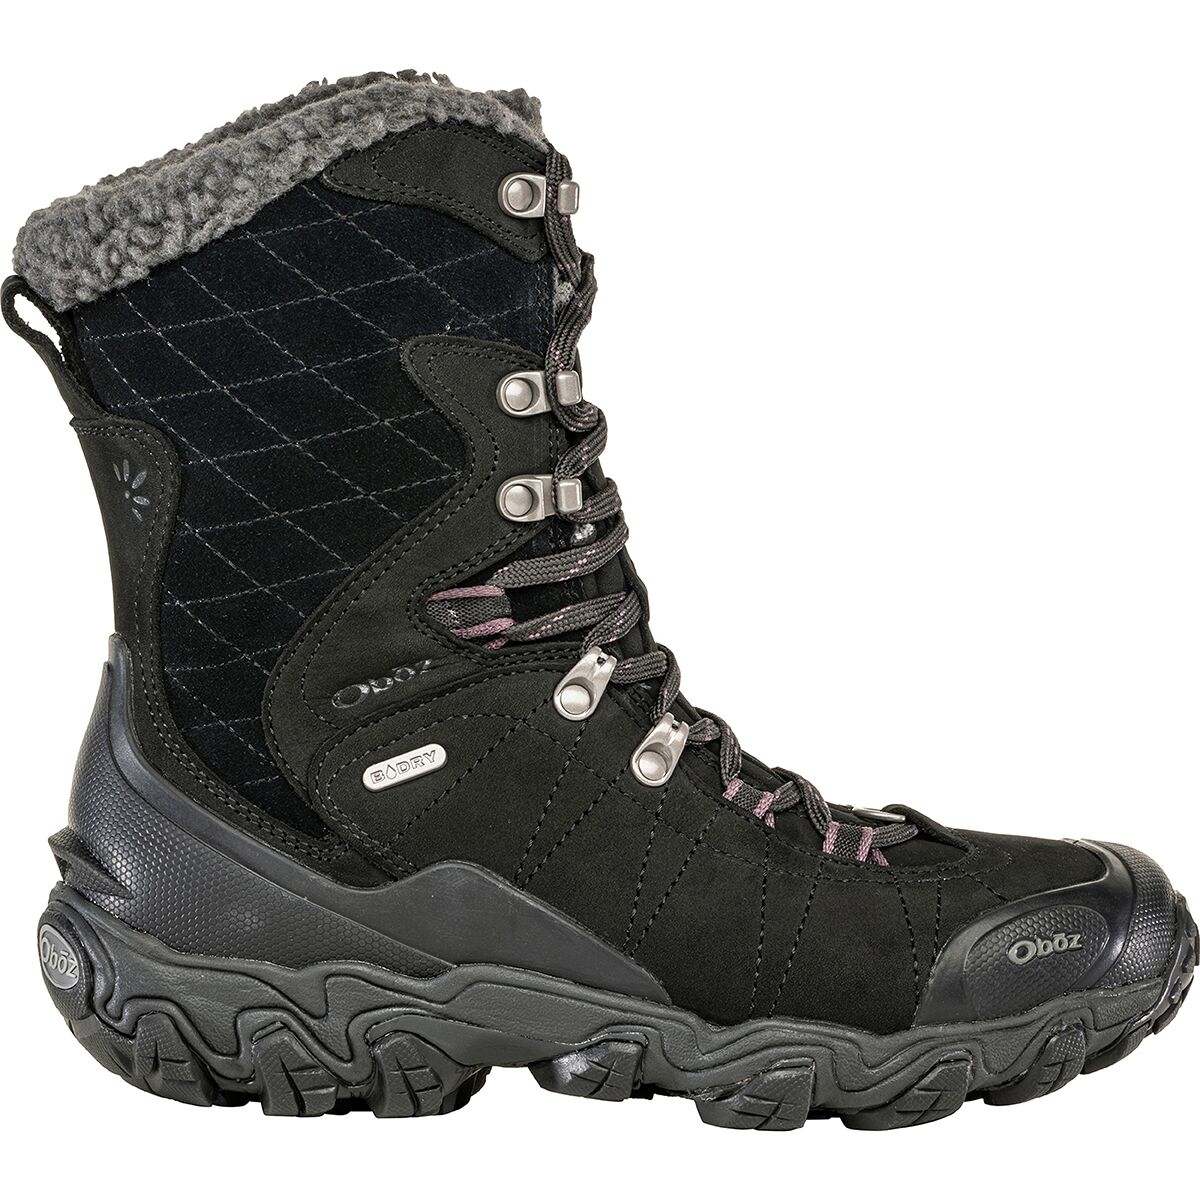 Bridger 9in Insulated B-Dry Boot - Women